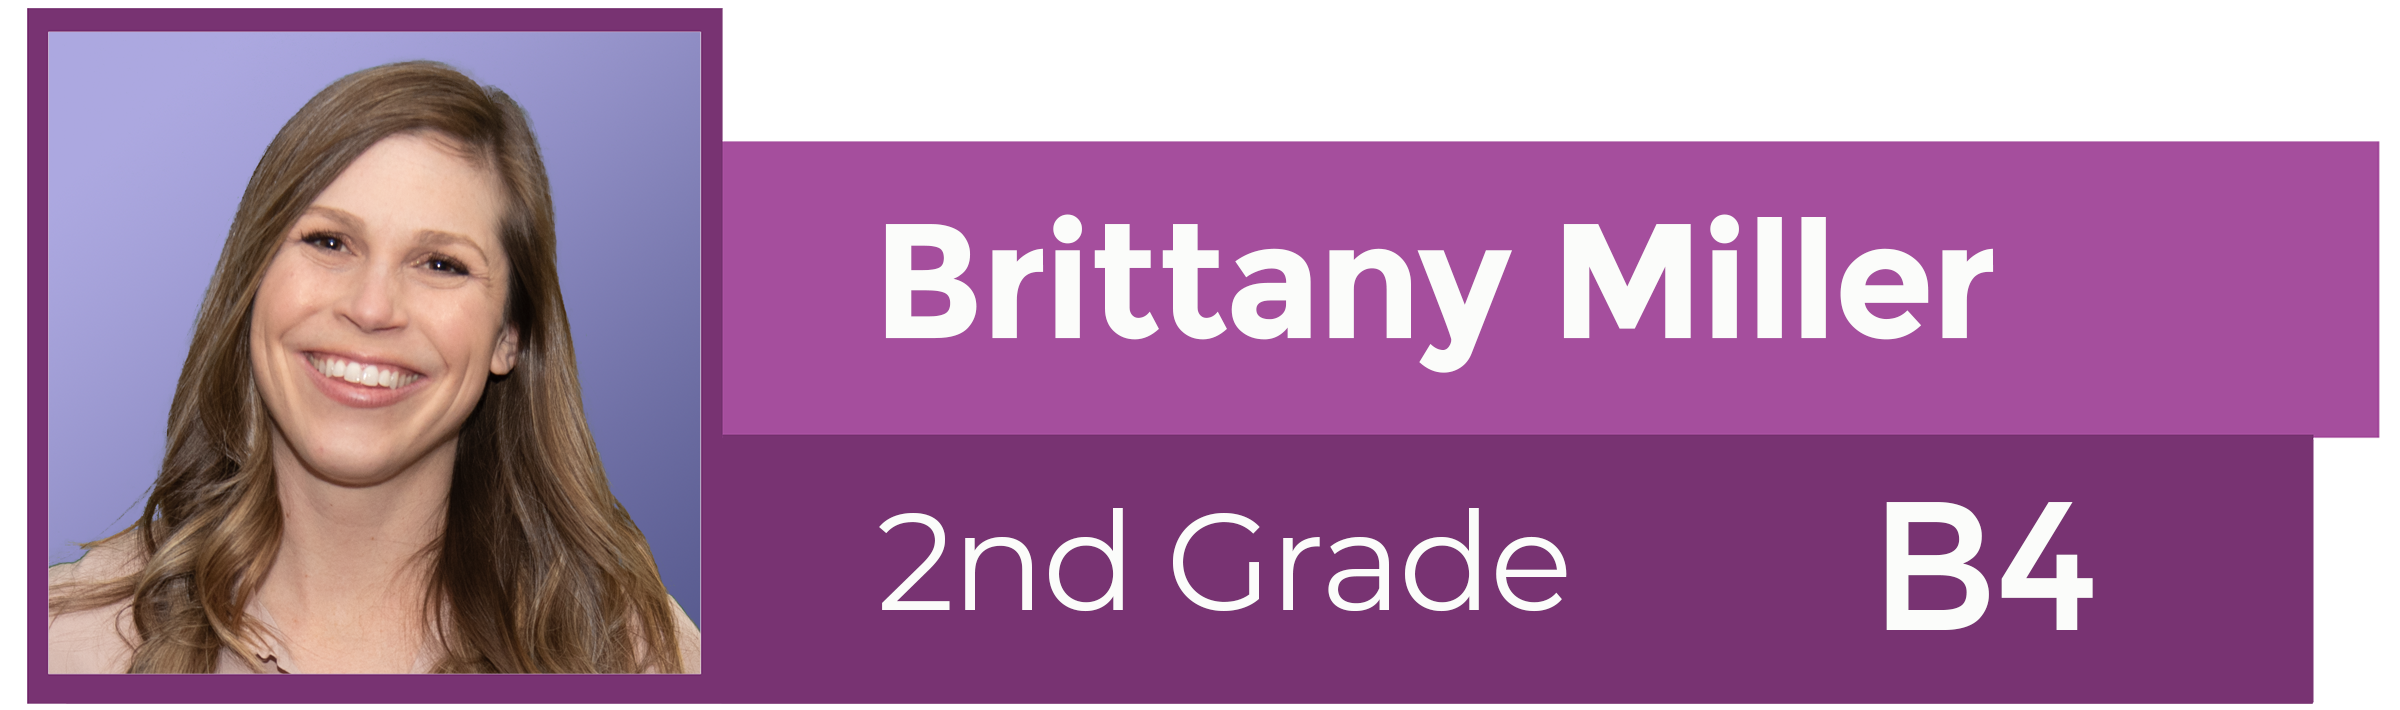 Brittany Miller 2nd Grade